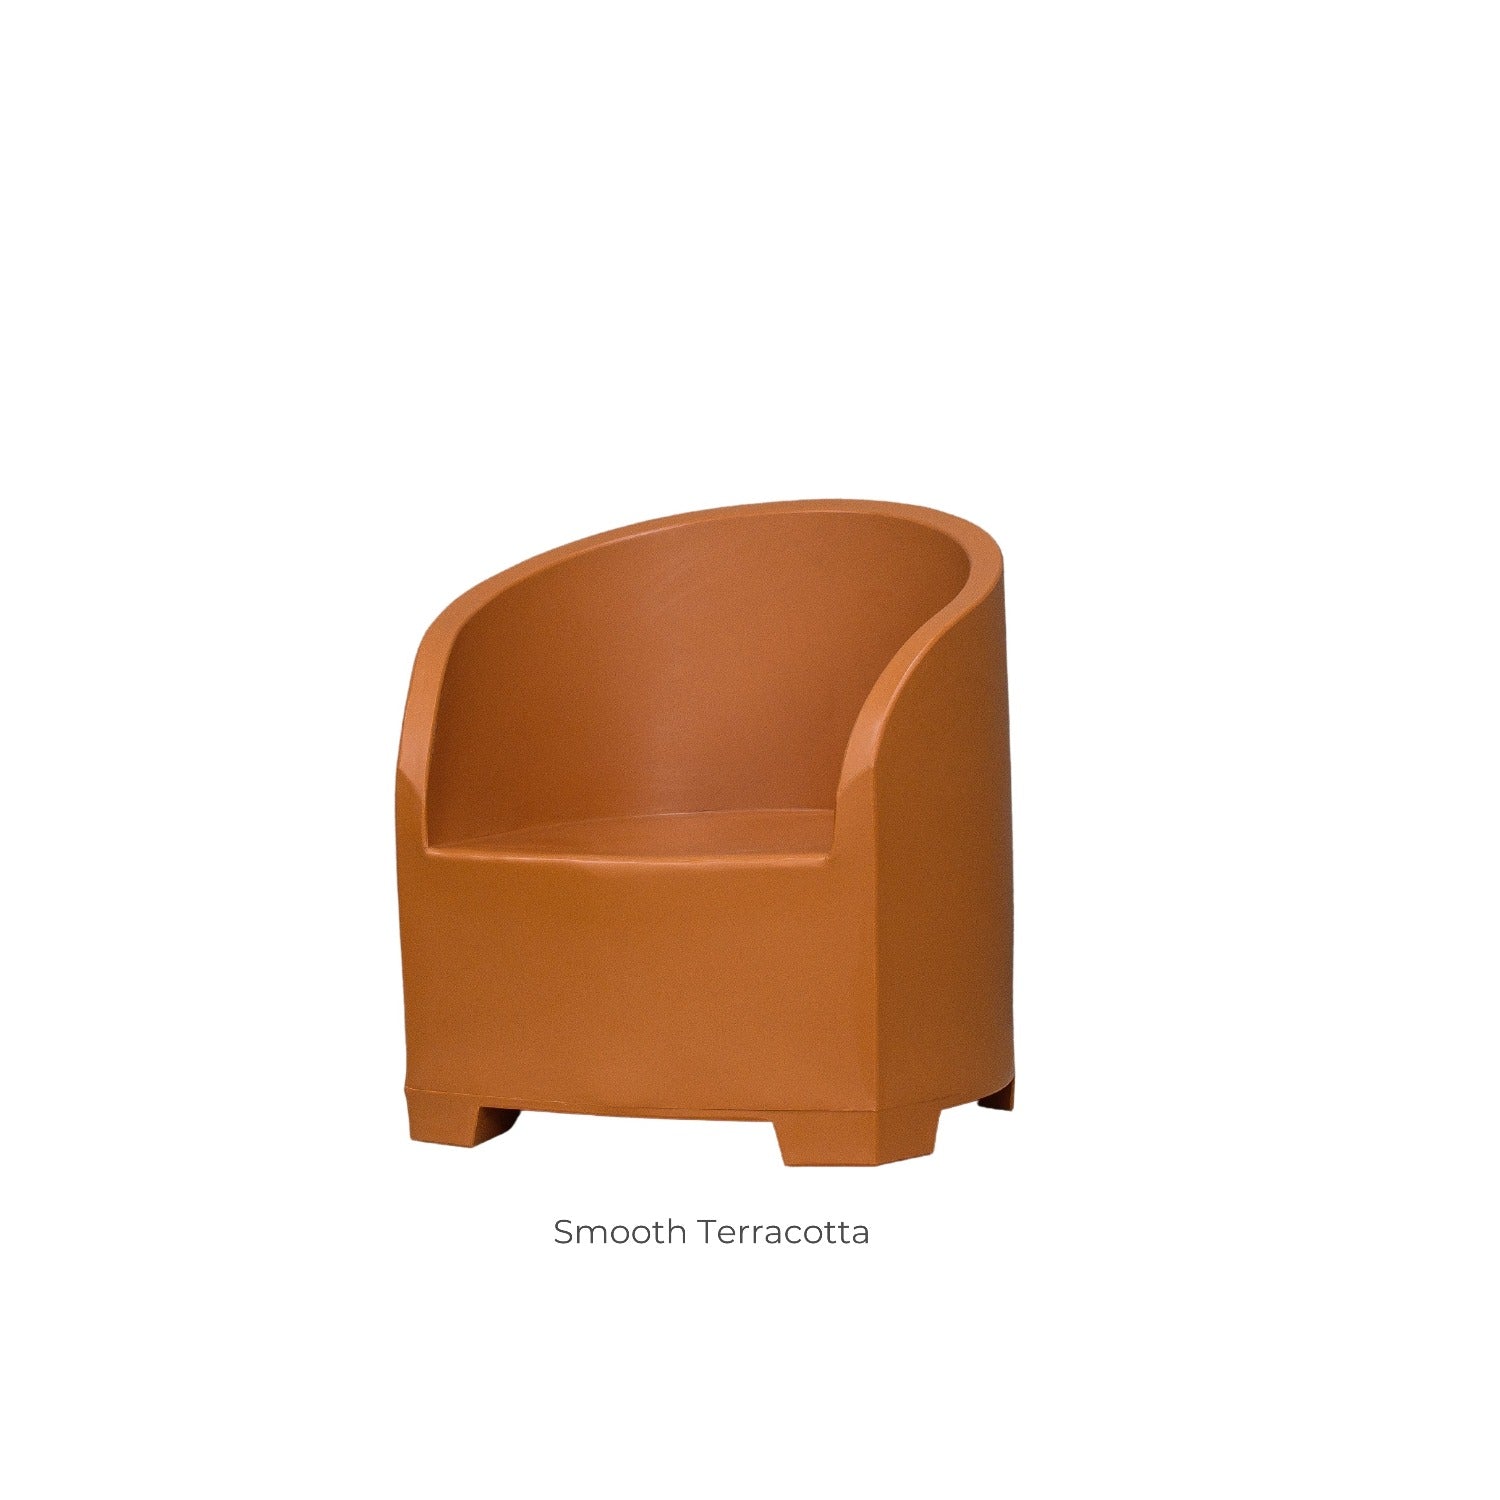 A terracotta chair made by Modscene NZ.